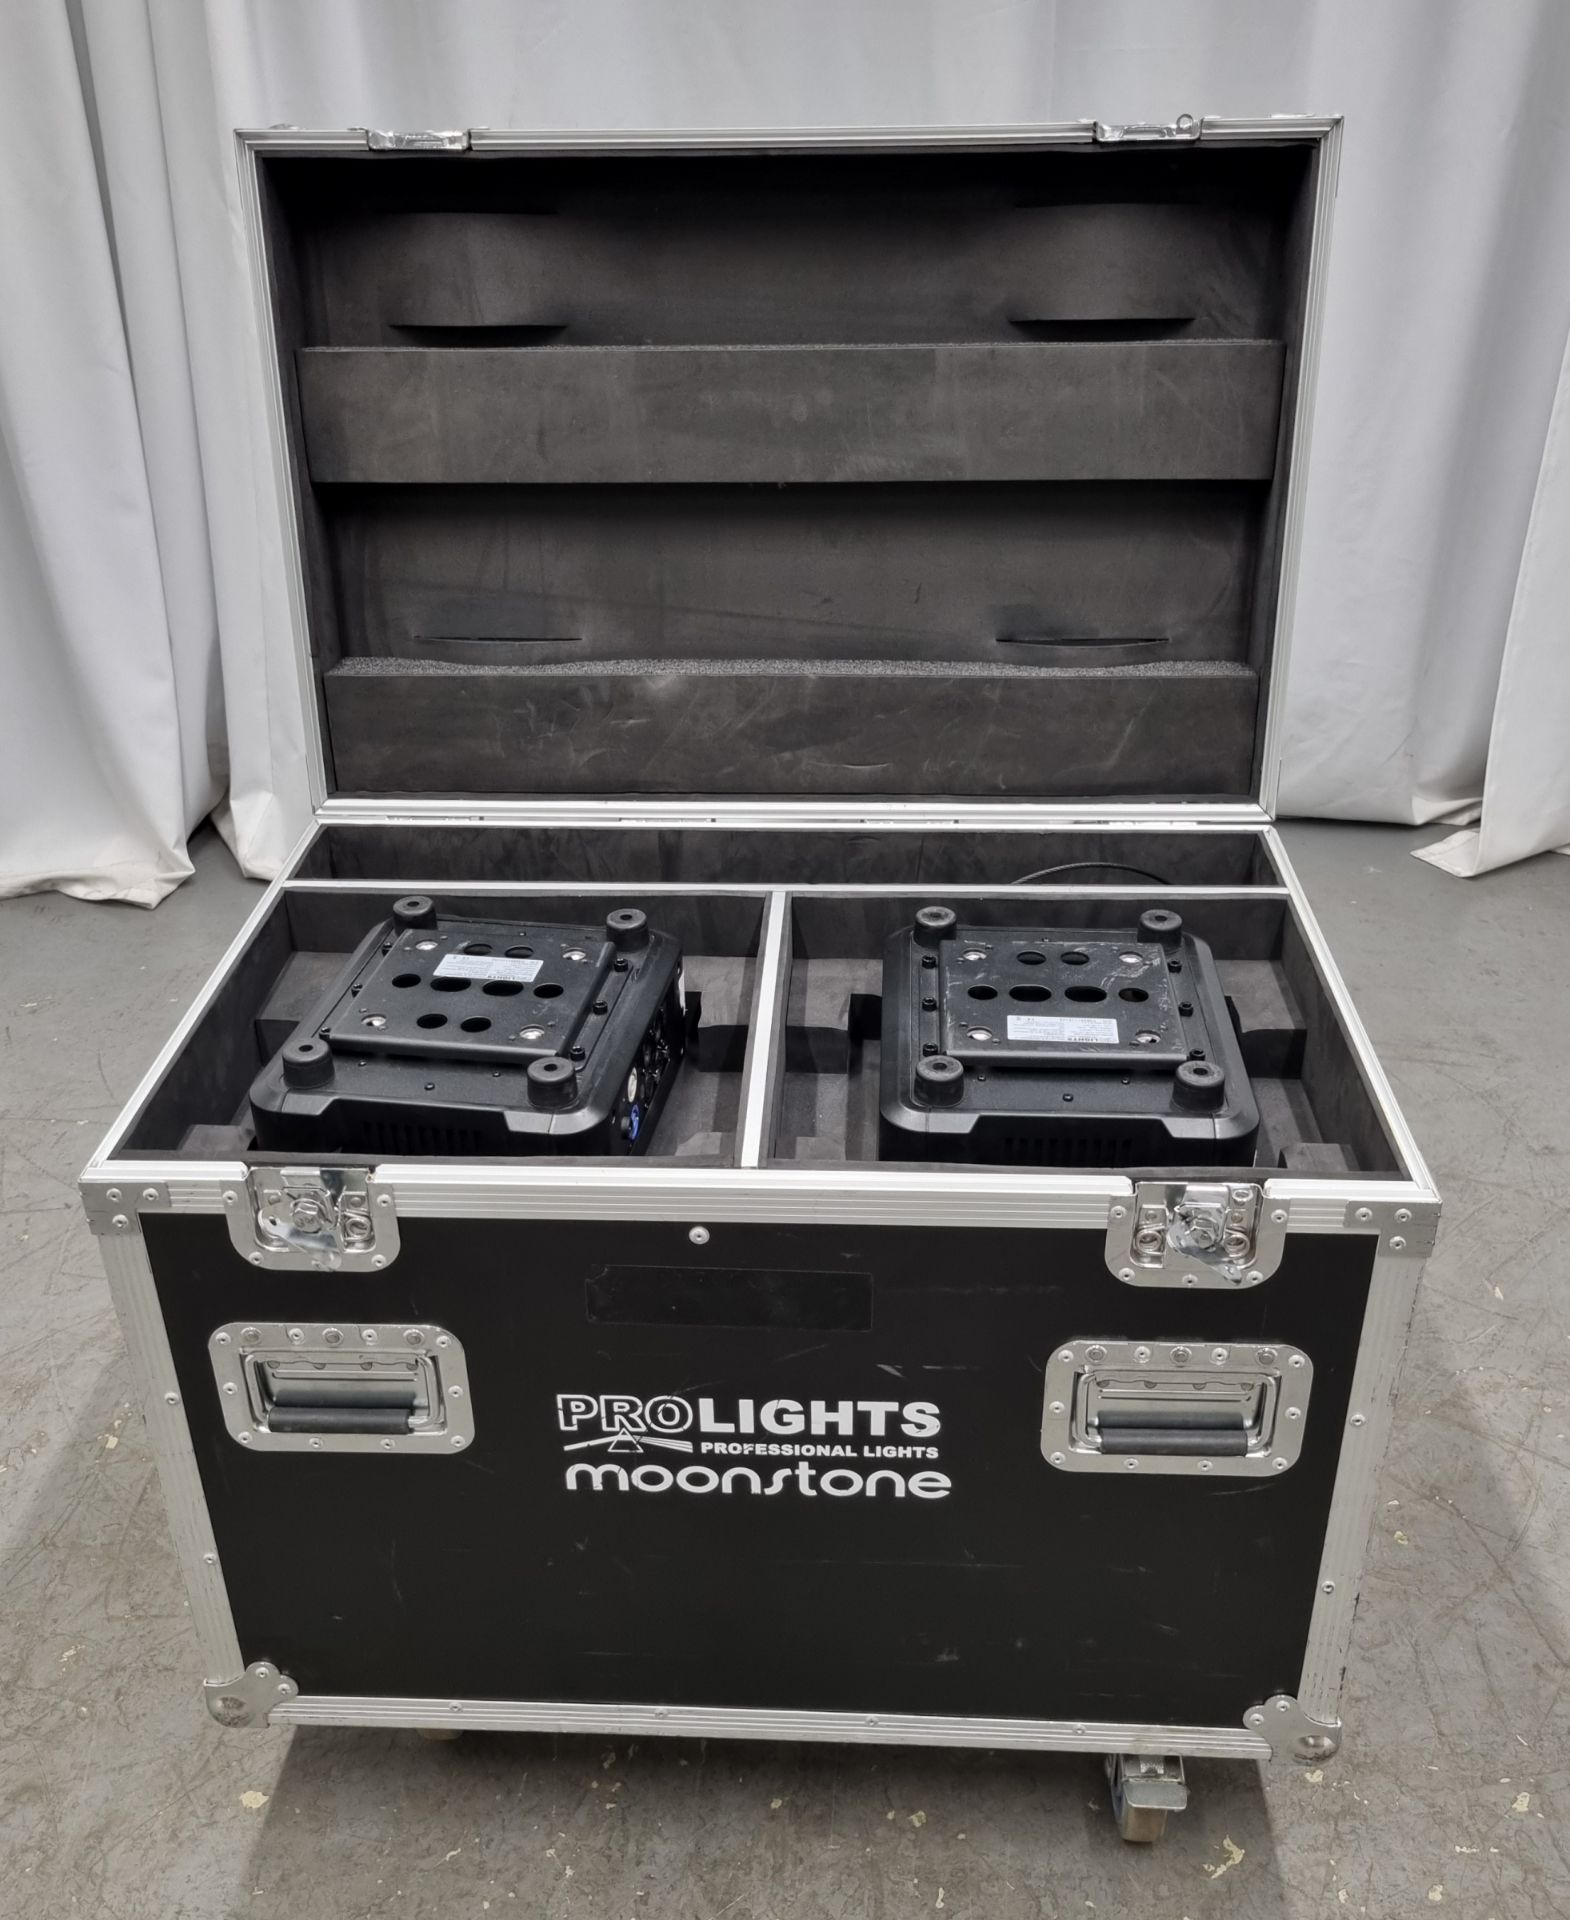 2x Prolights Moonstone LED spot moving head lights with flight case - Image 9 of 13